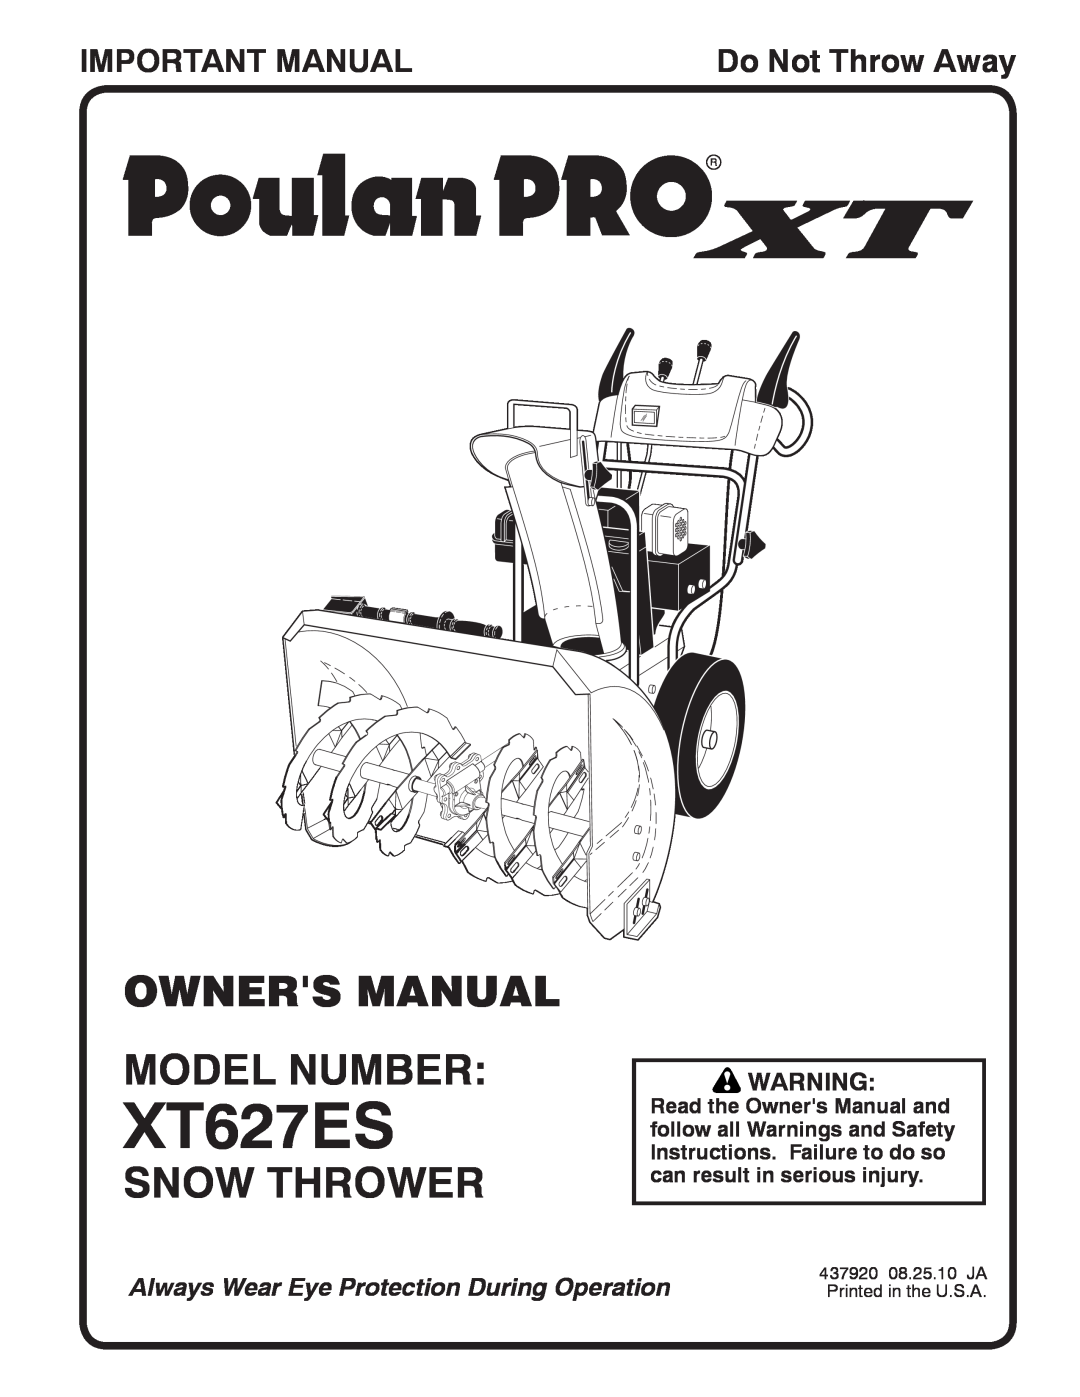 Poulan 96192004501, 437920 owner manual Snow Thrower, Important Manual, XT627ES, Do Not Throw Away 